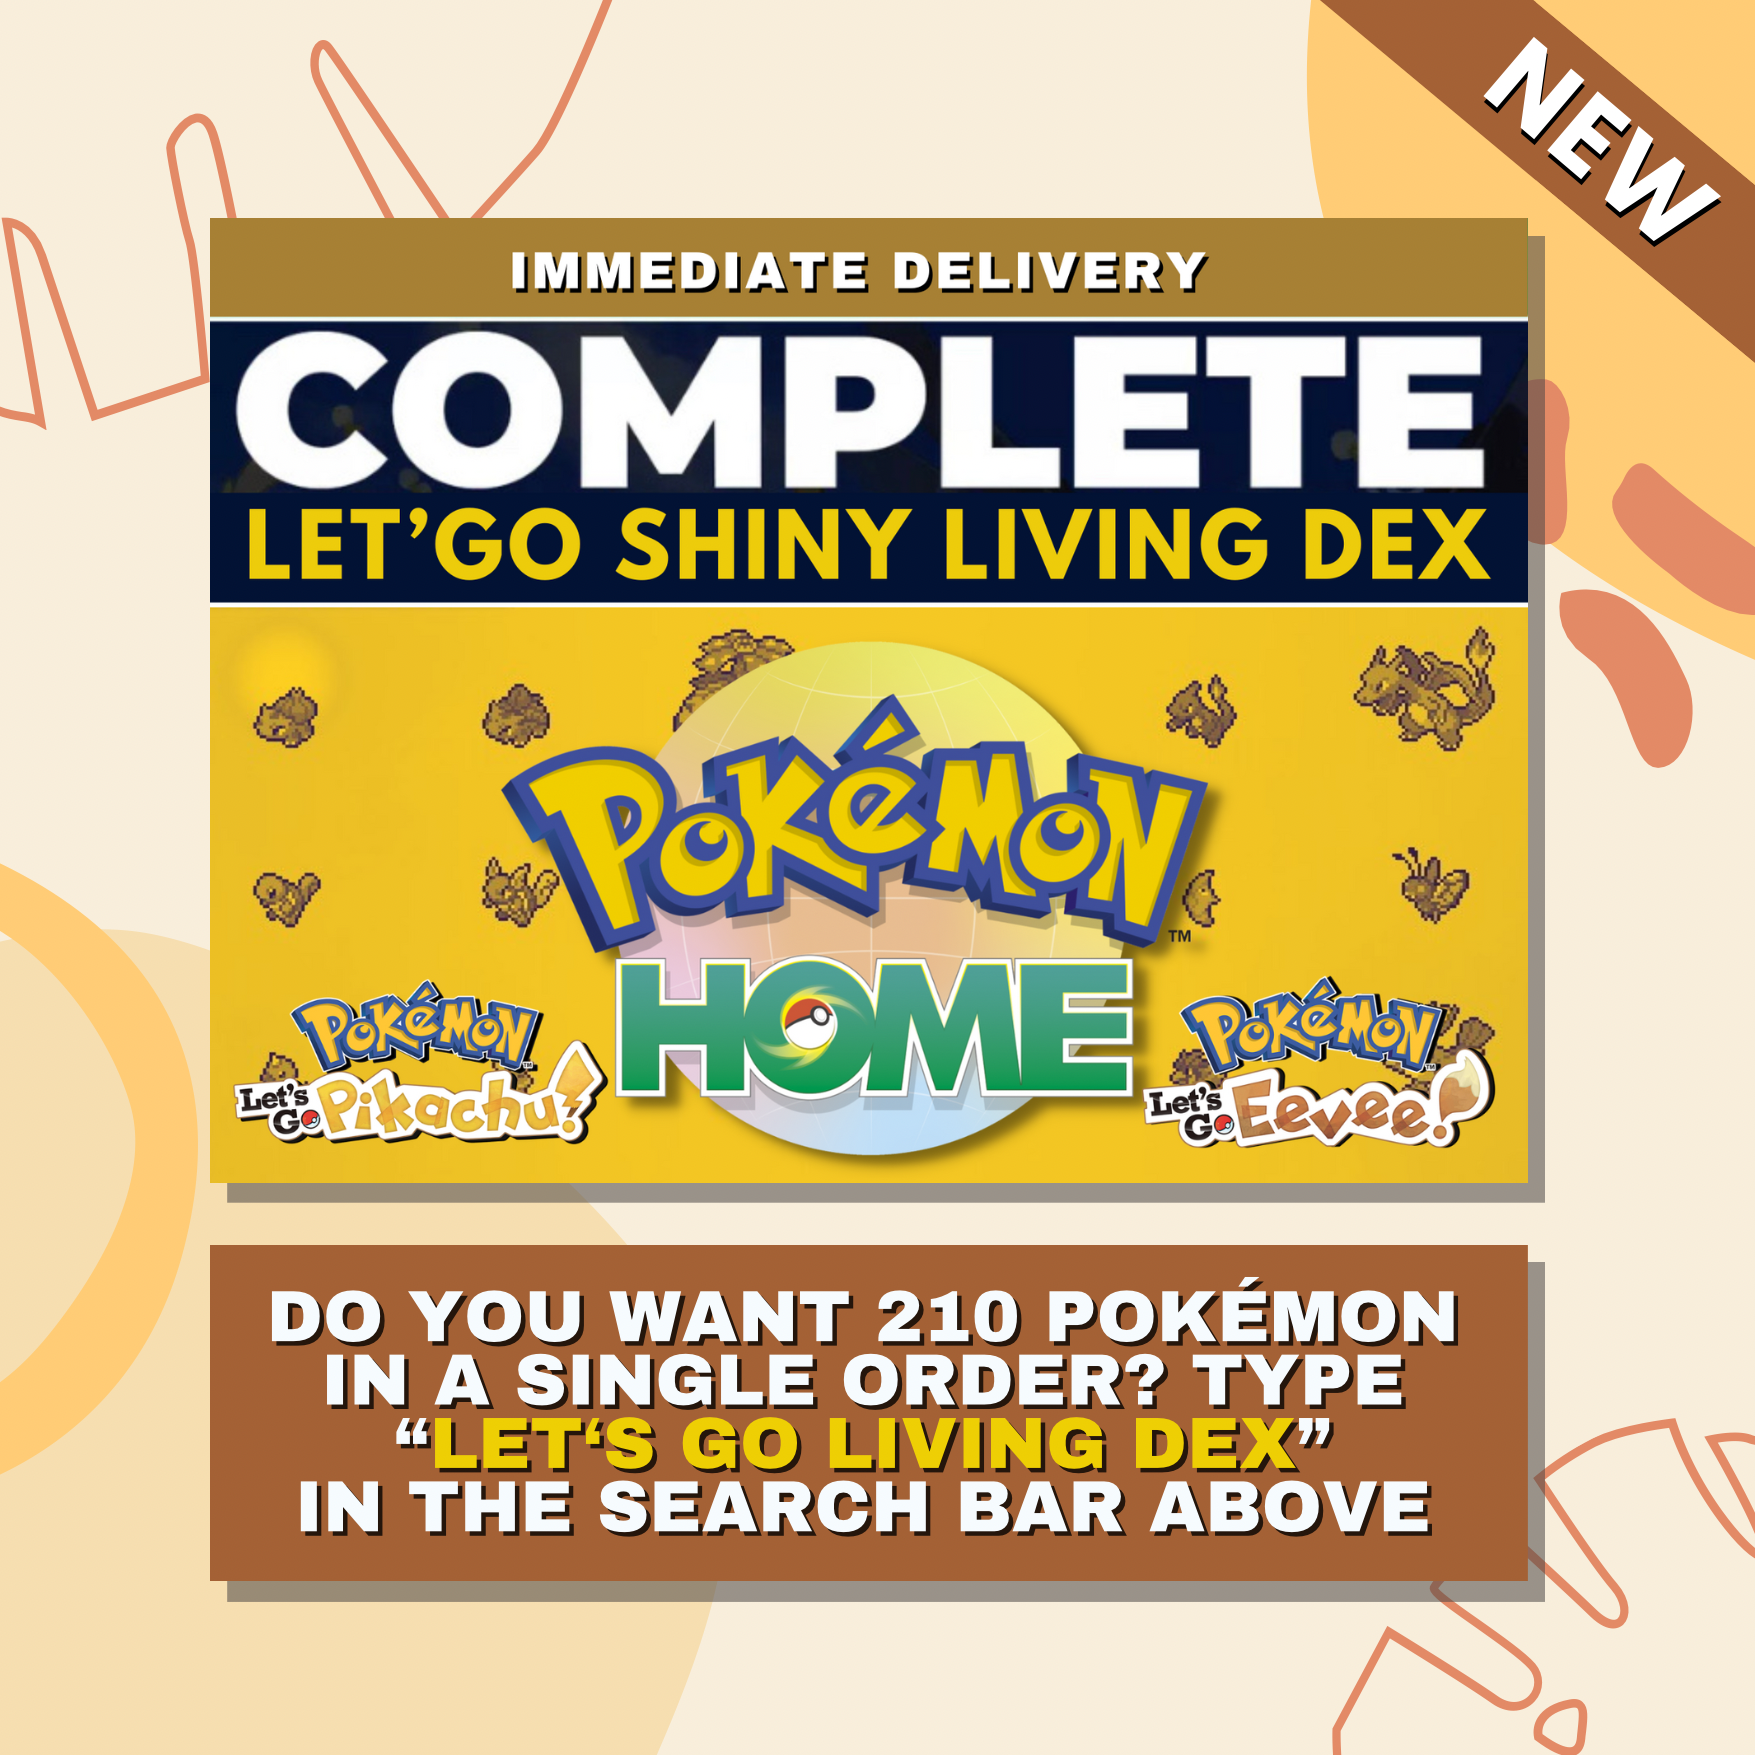 Electrode Shiny ✨ or Non Shiny Pokémon Let's Go Pikachu Eevee Level 100 Competitive Battle Ready 6 IV 100% Legit Legal Customizable Custom OT by Shiny Living Dex | Shiny Living Dex